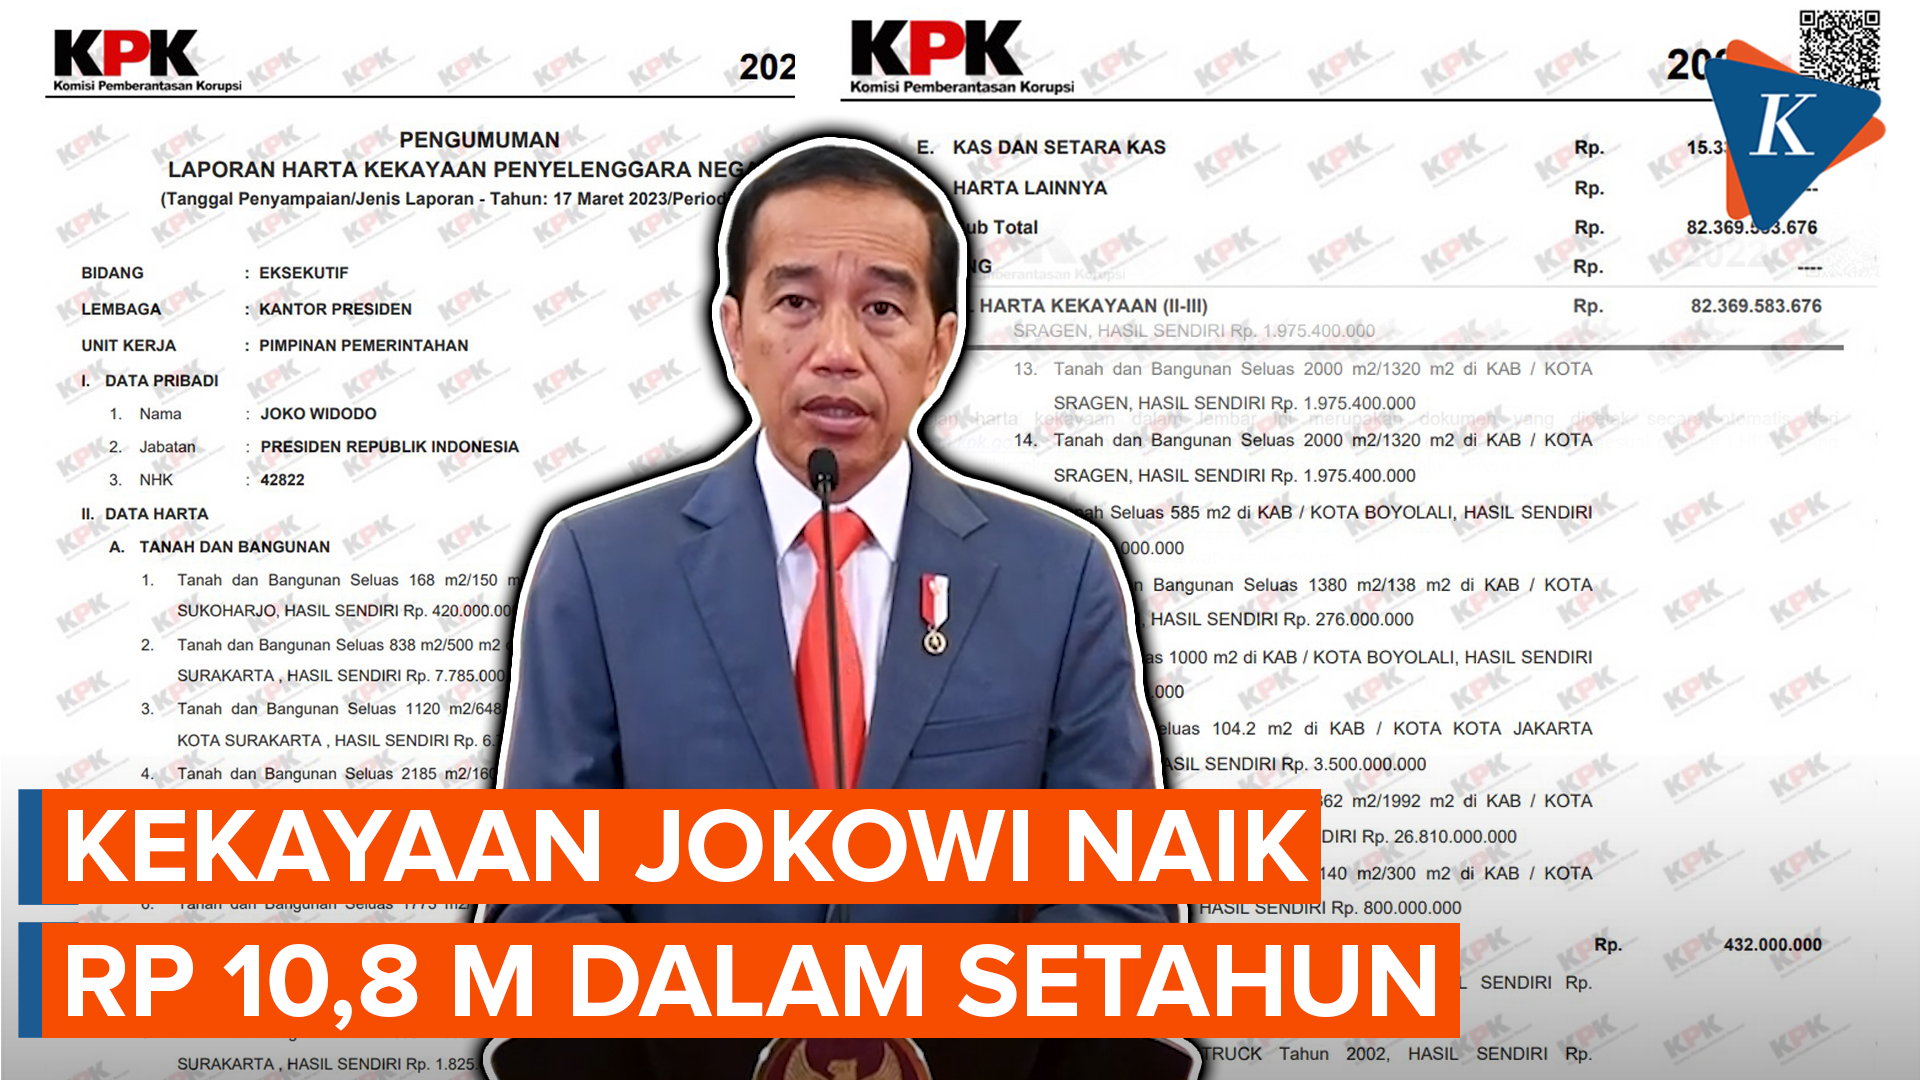 Alasan Harta Kekayaan Jokowi Naik Rp 10,8 M dalam Setahun